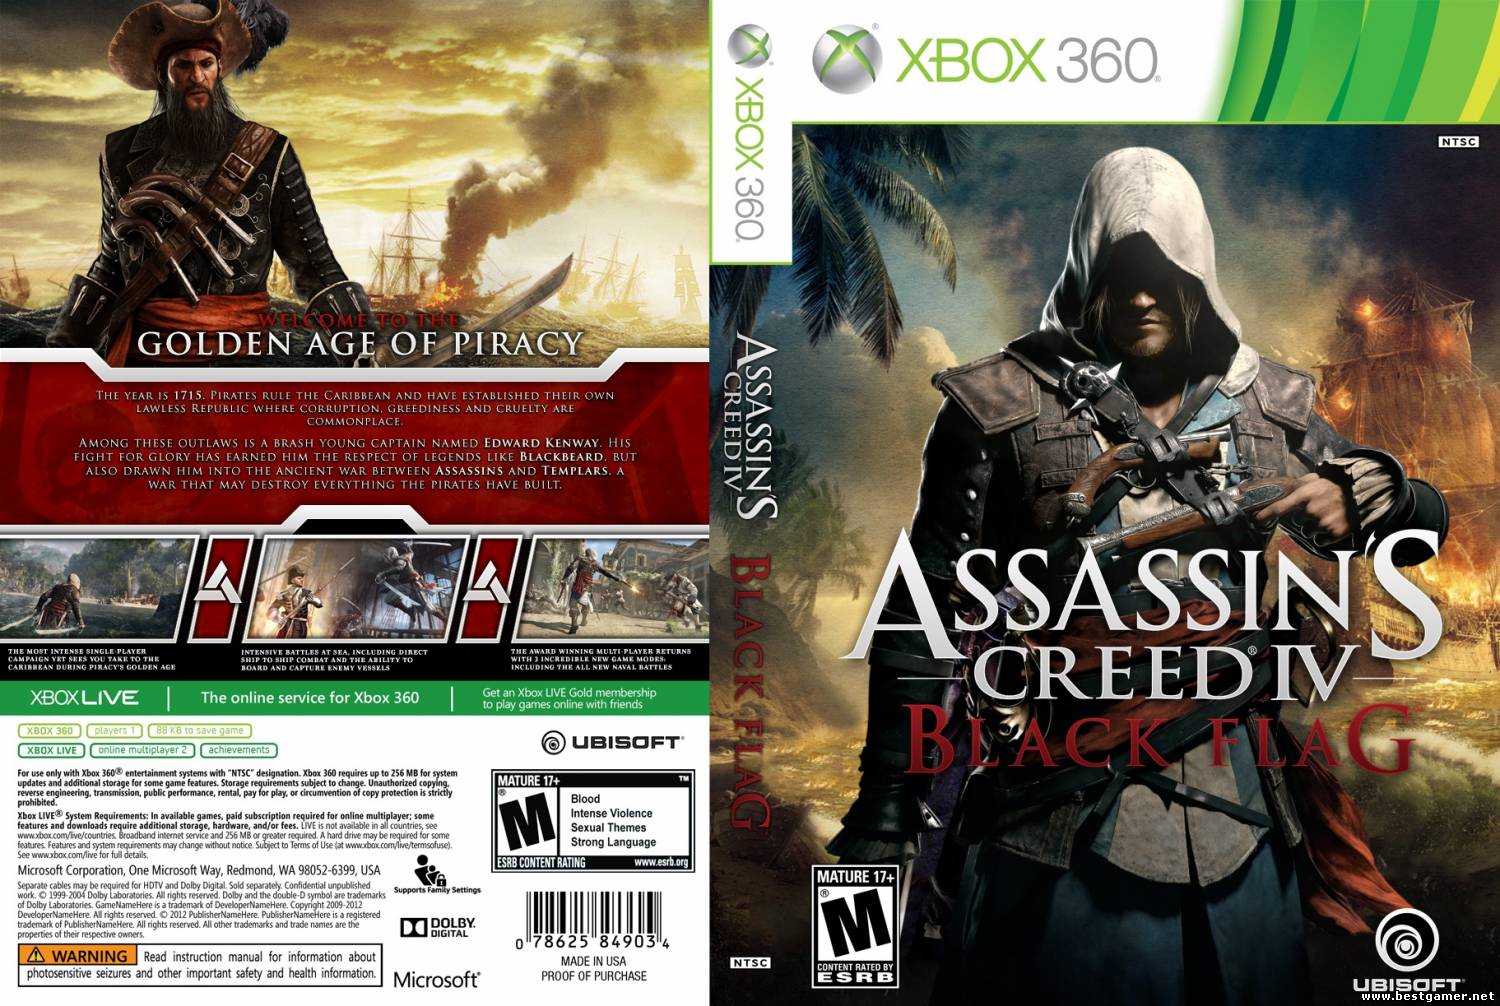 Xbox 360 год игры. Обложки игр для Xbox 360. Ассасин Крид 4 обложка хбокс 360. Assassins Creed Black Flag Xbox 360 обложка. Обложки игр ассасин Крид 4 хбокс 360.